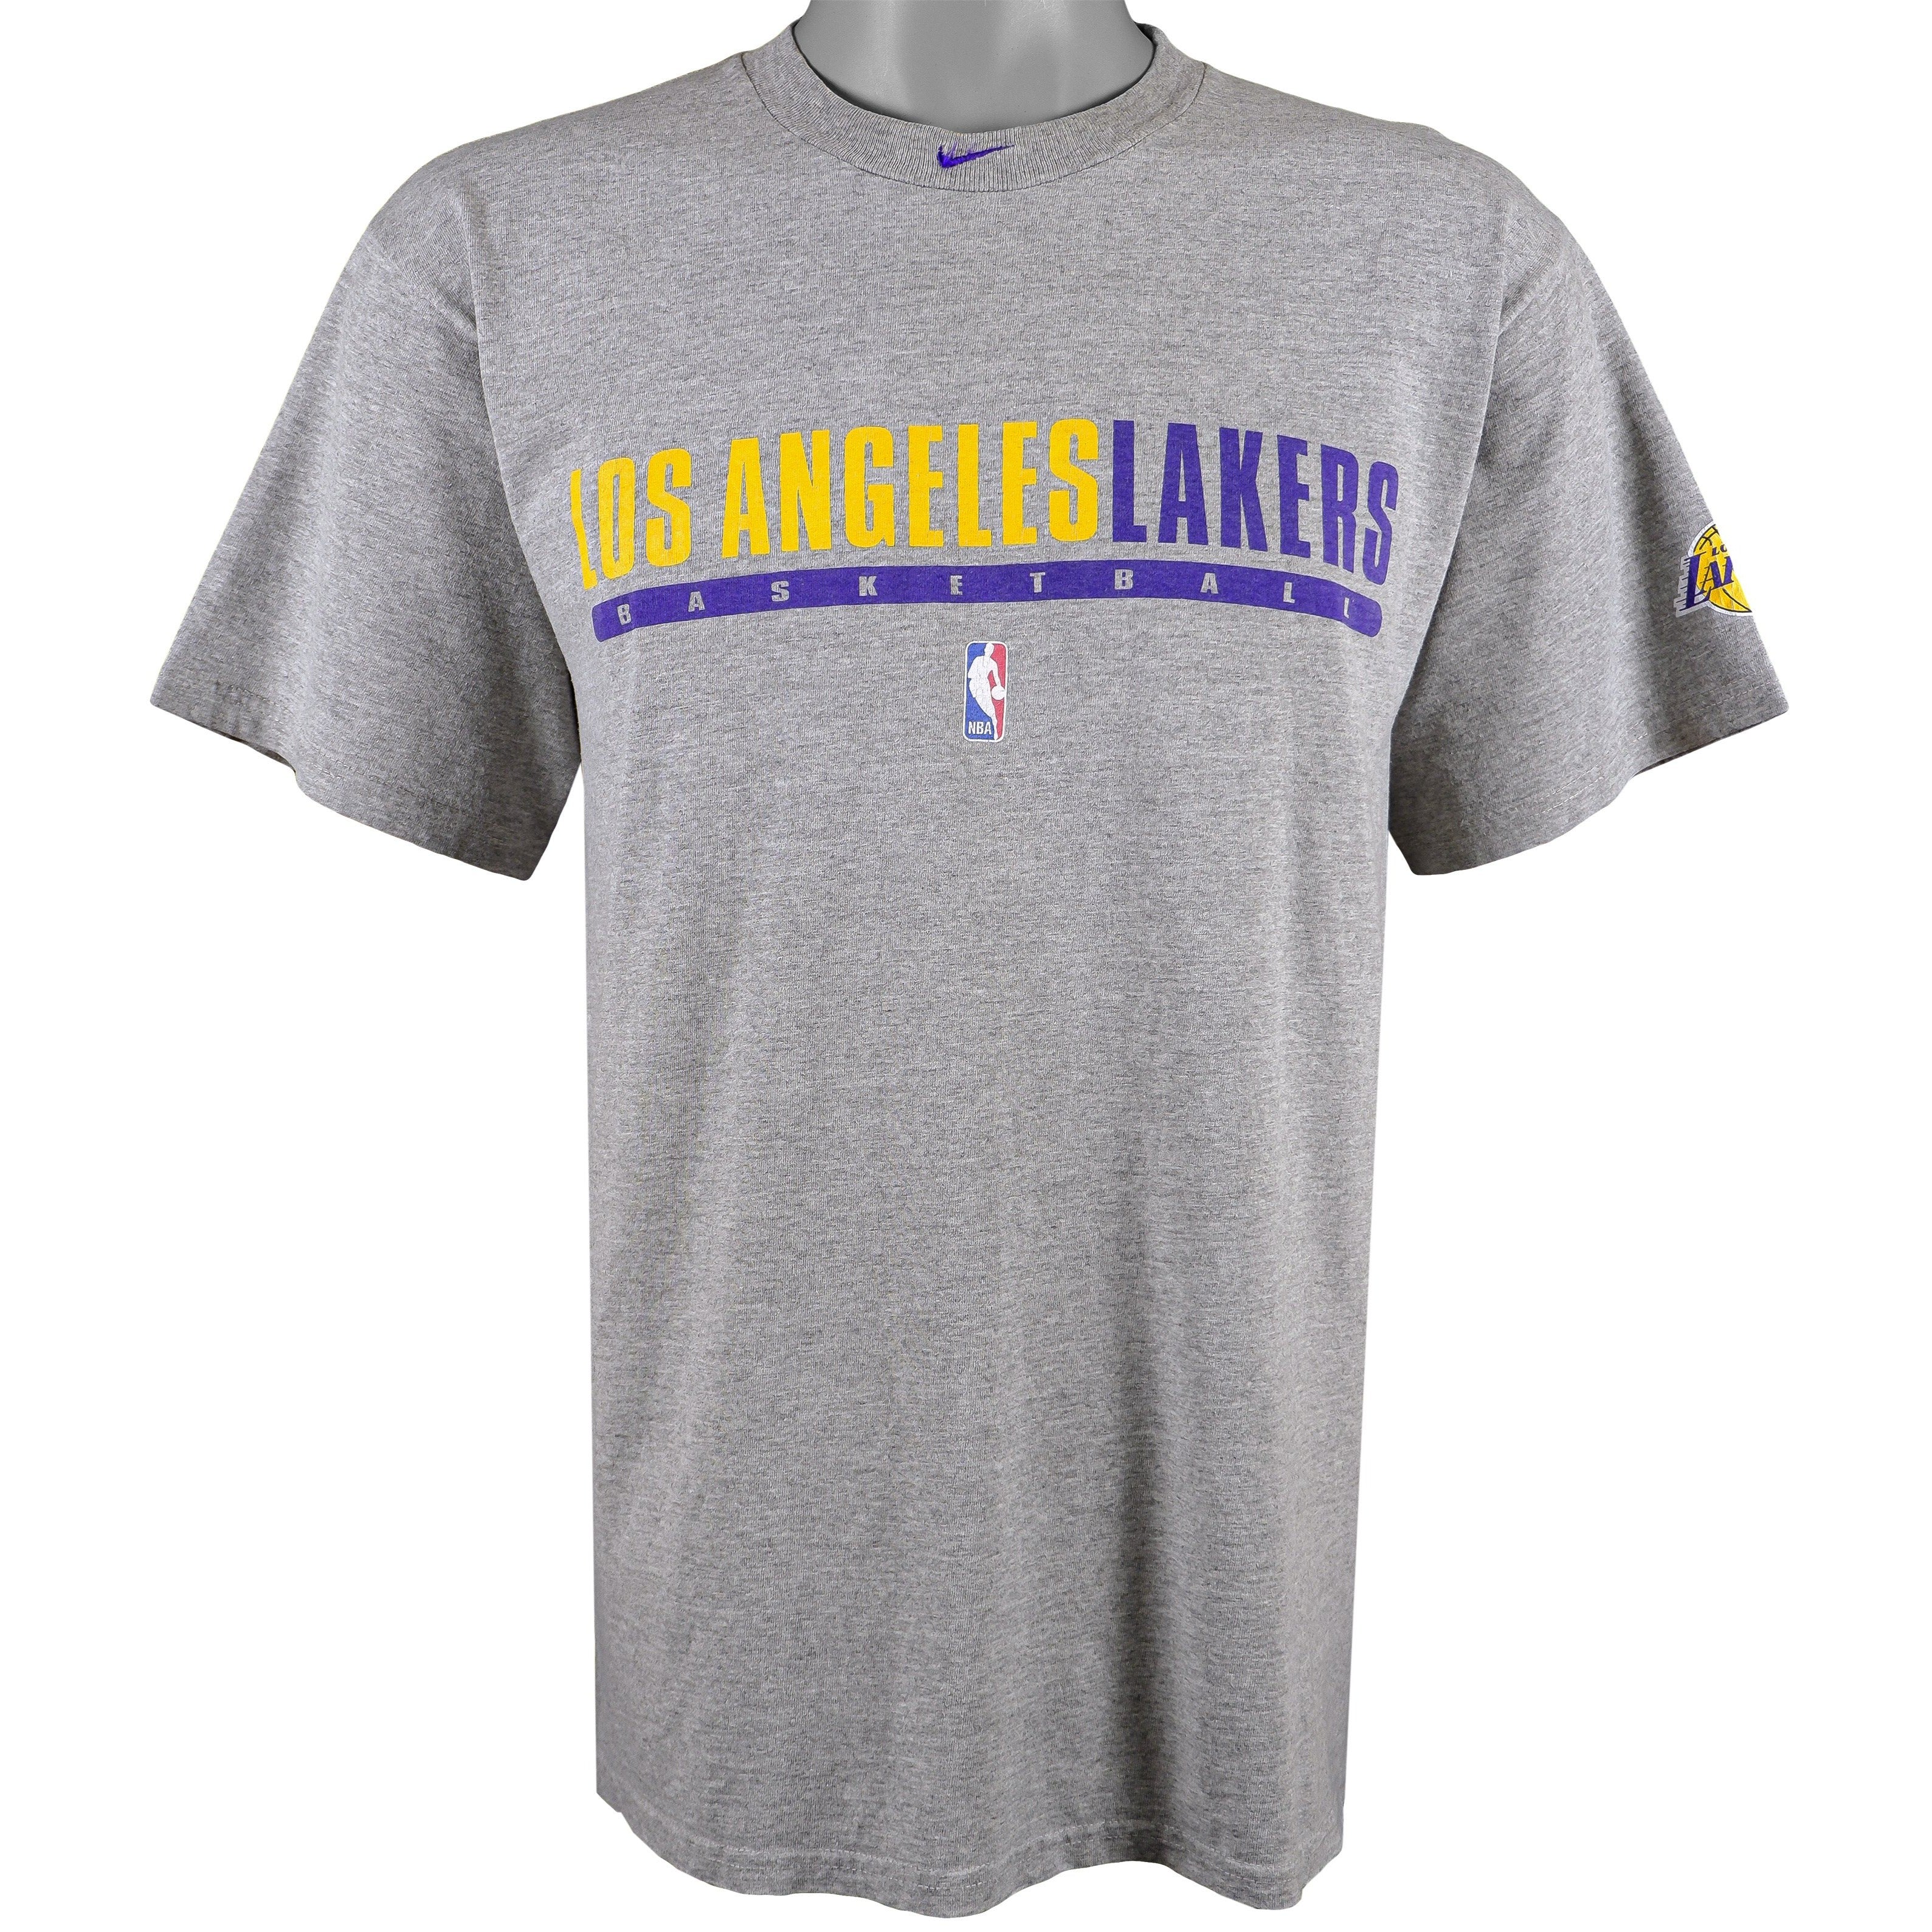 Nike NBA T-Shirt Men's Tee Los Angeles Lakers "Champs